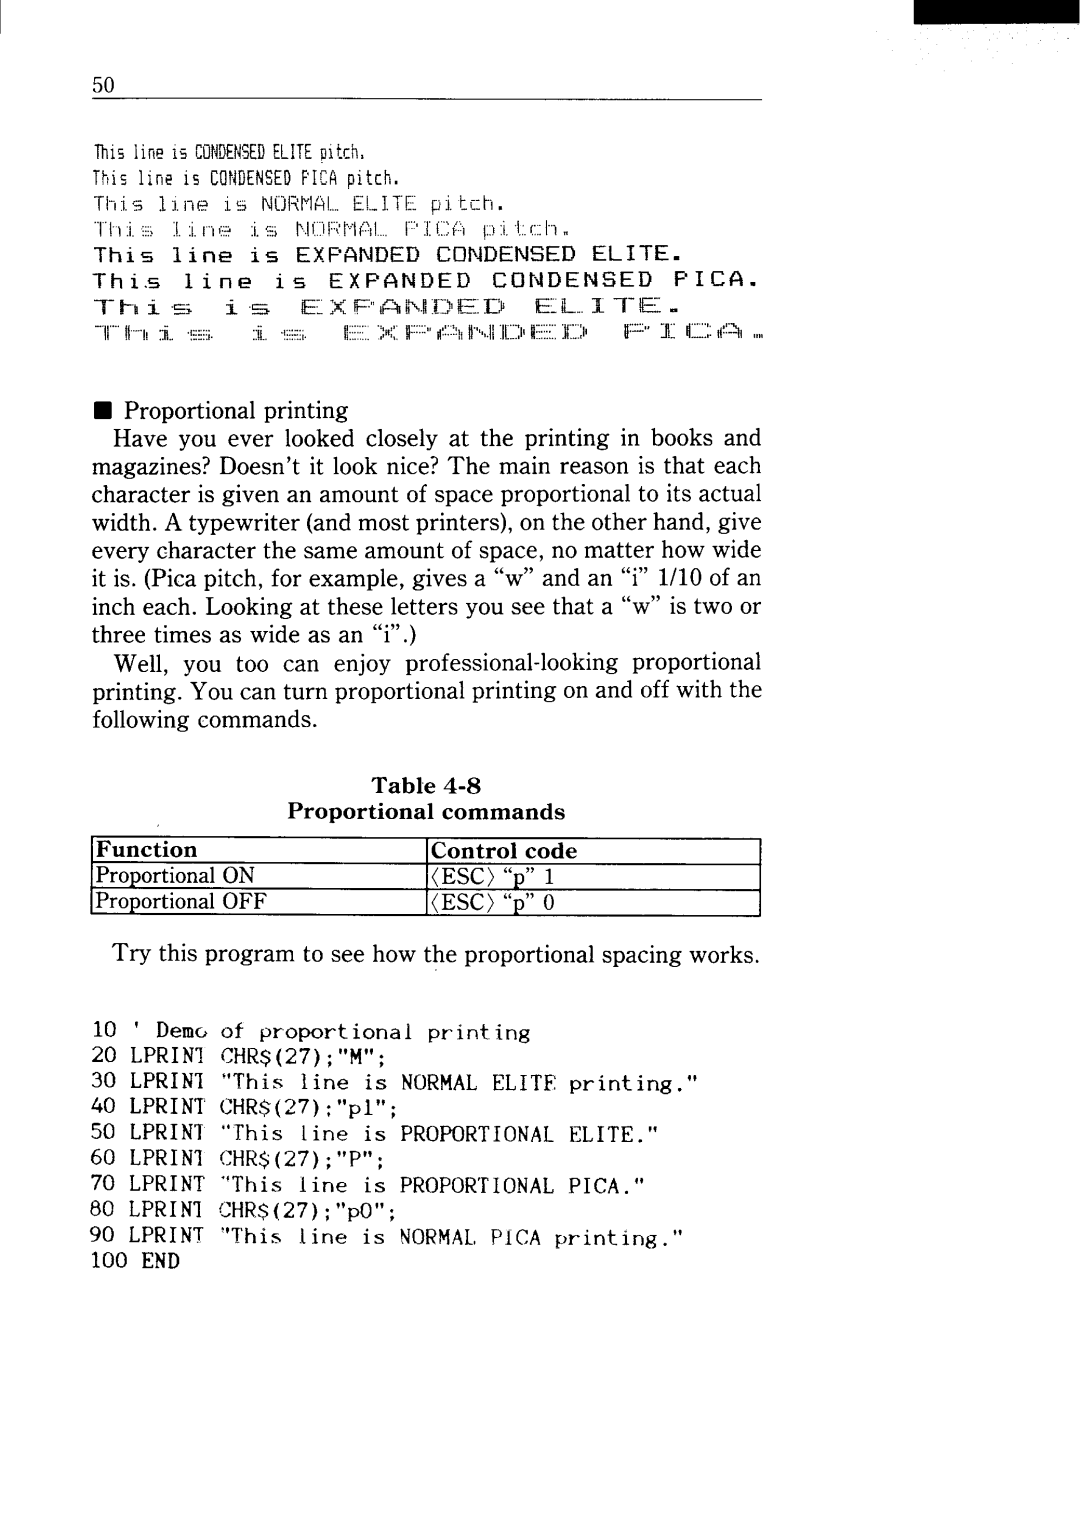 Star Micronics NX-15 user manual ProportionalON, ProportionalOFF, ESC “p” O 